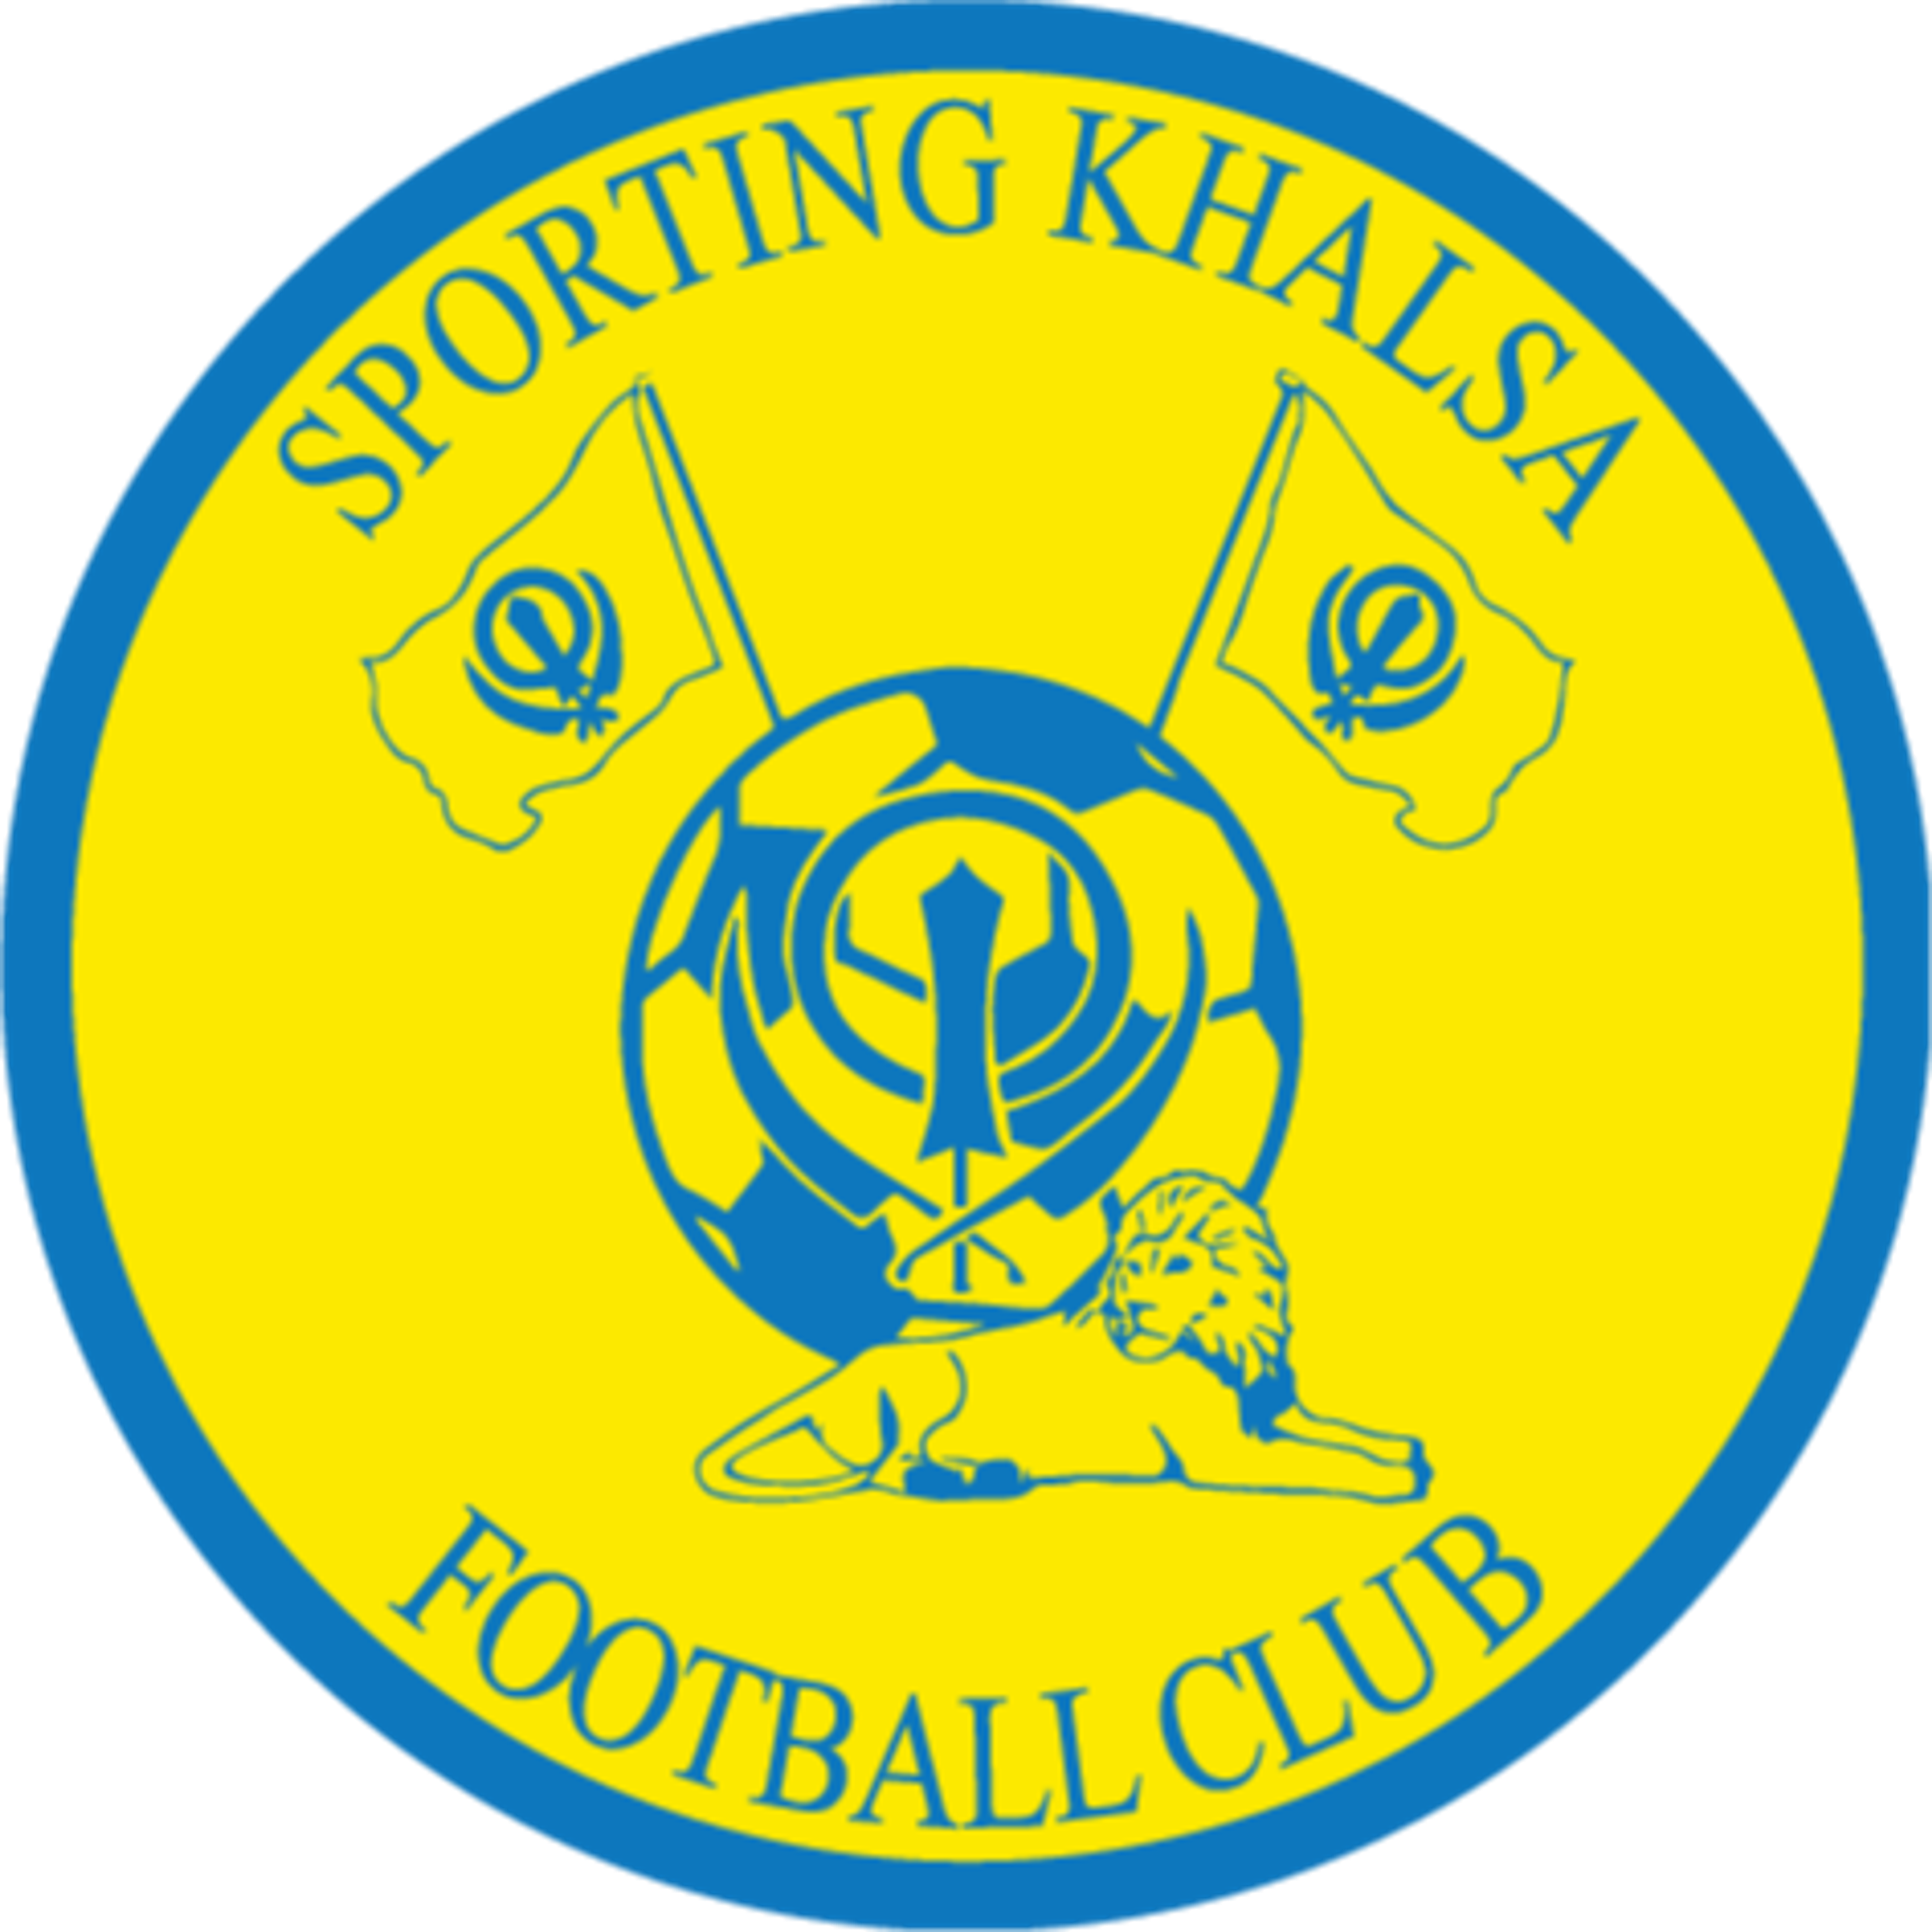 Logo for Sporting Khalsa Football Club